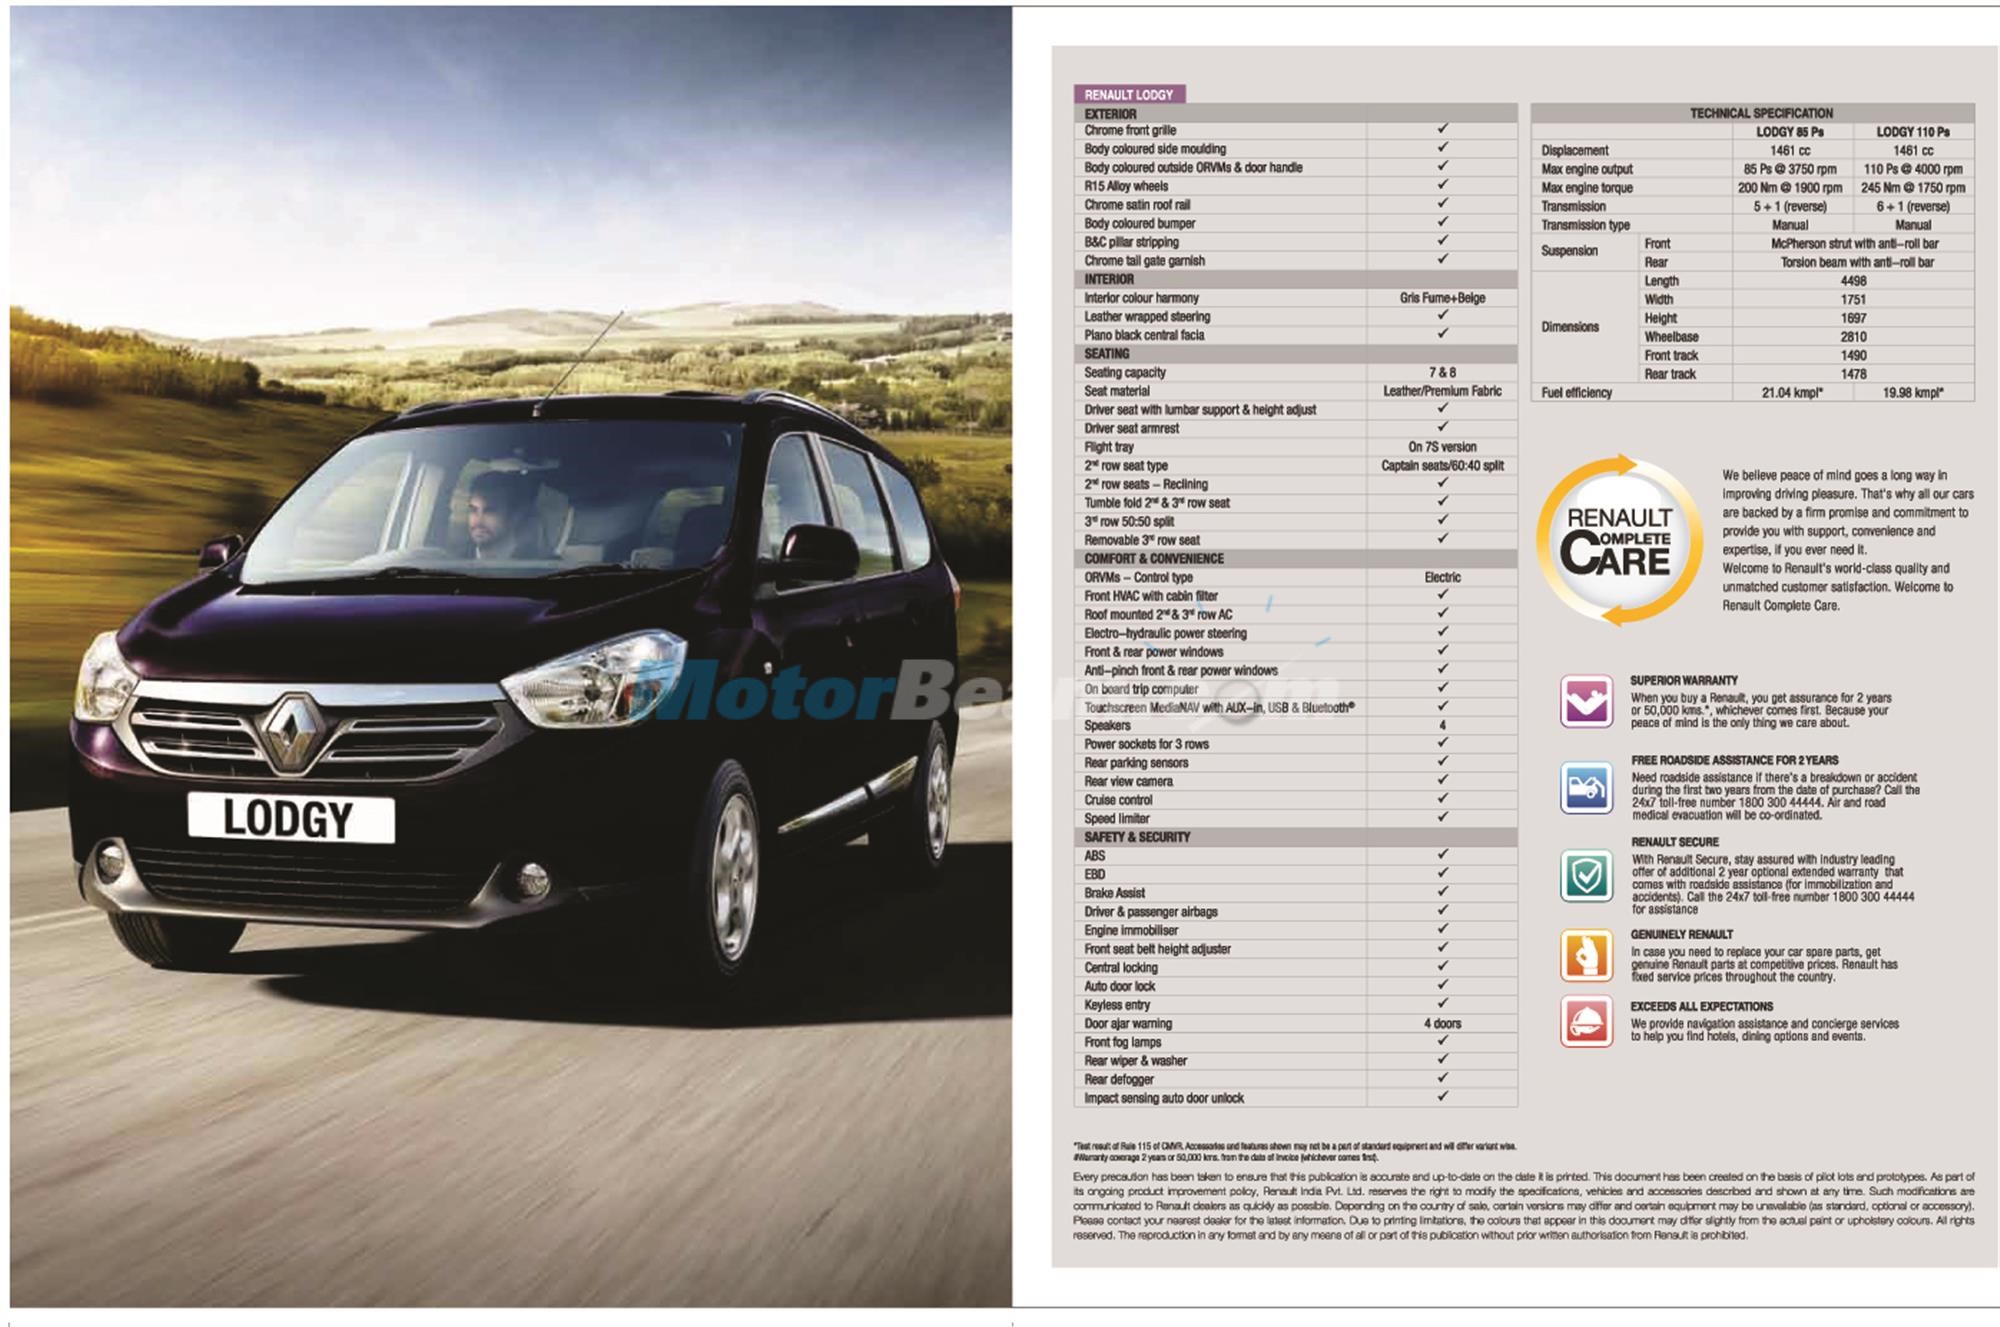 2015 Renault Lodgy Brochure